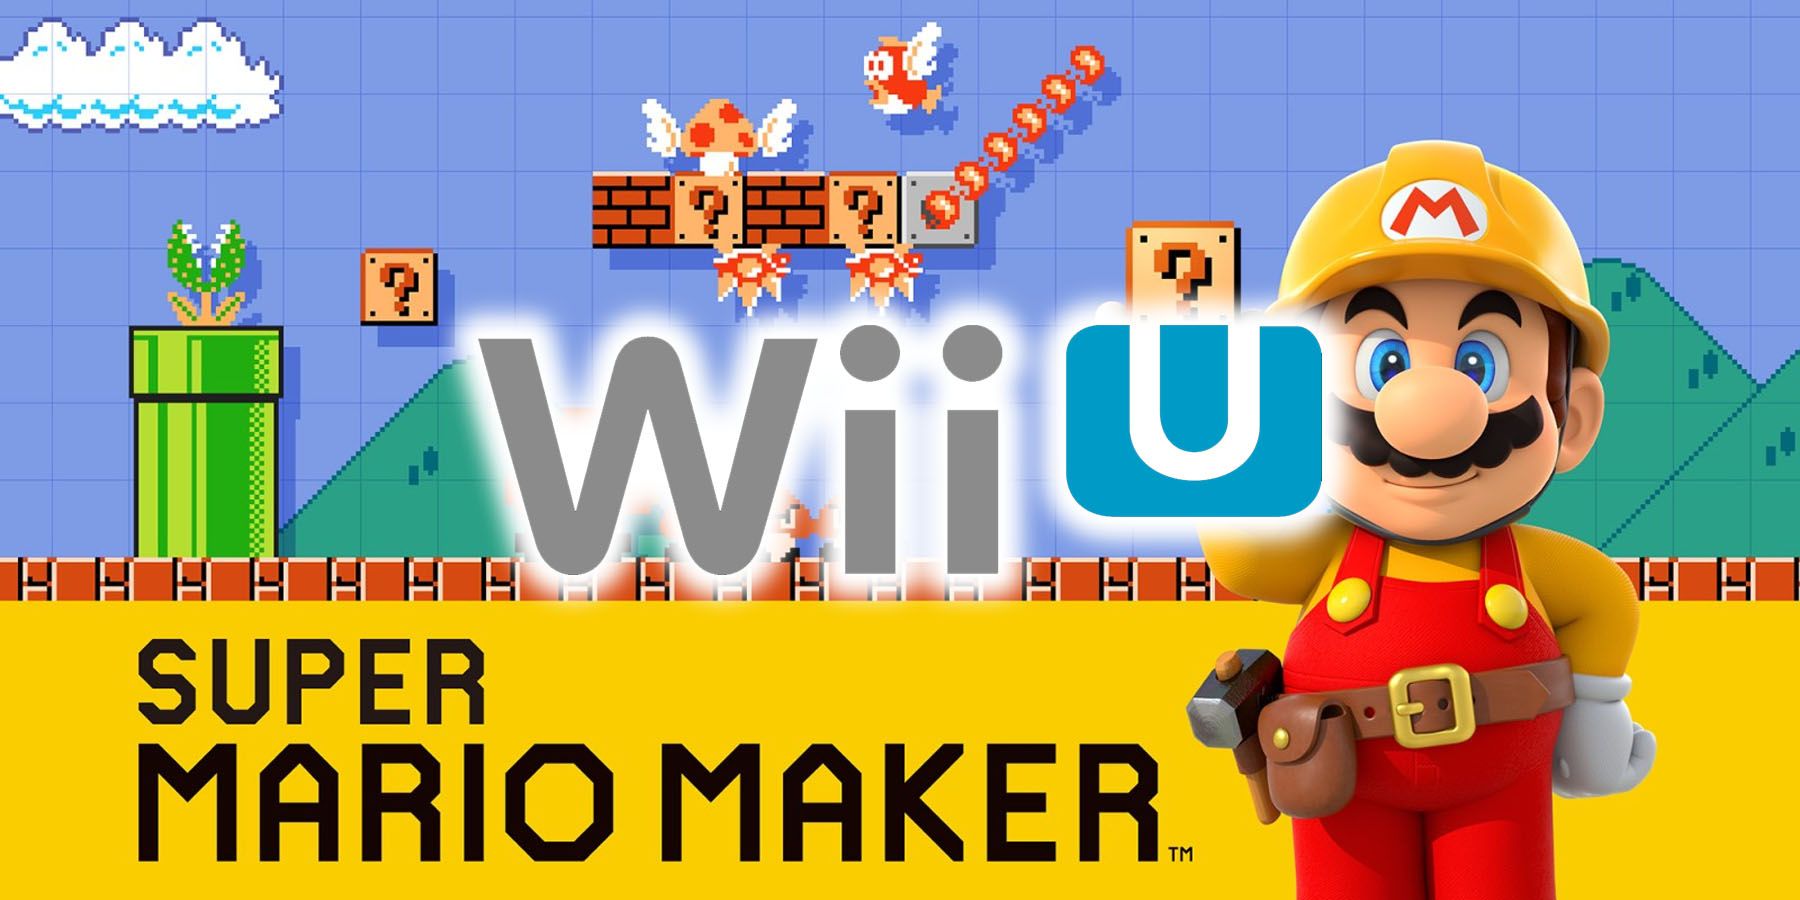 Super Mario Maker Wii U logo